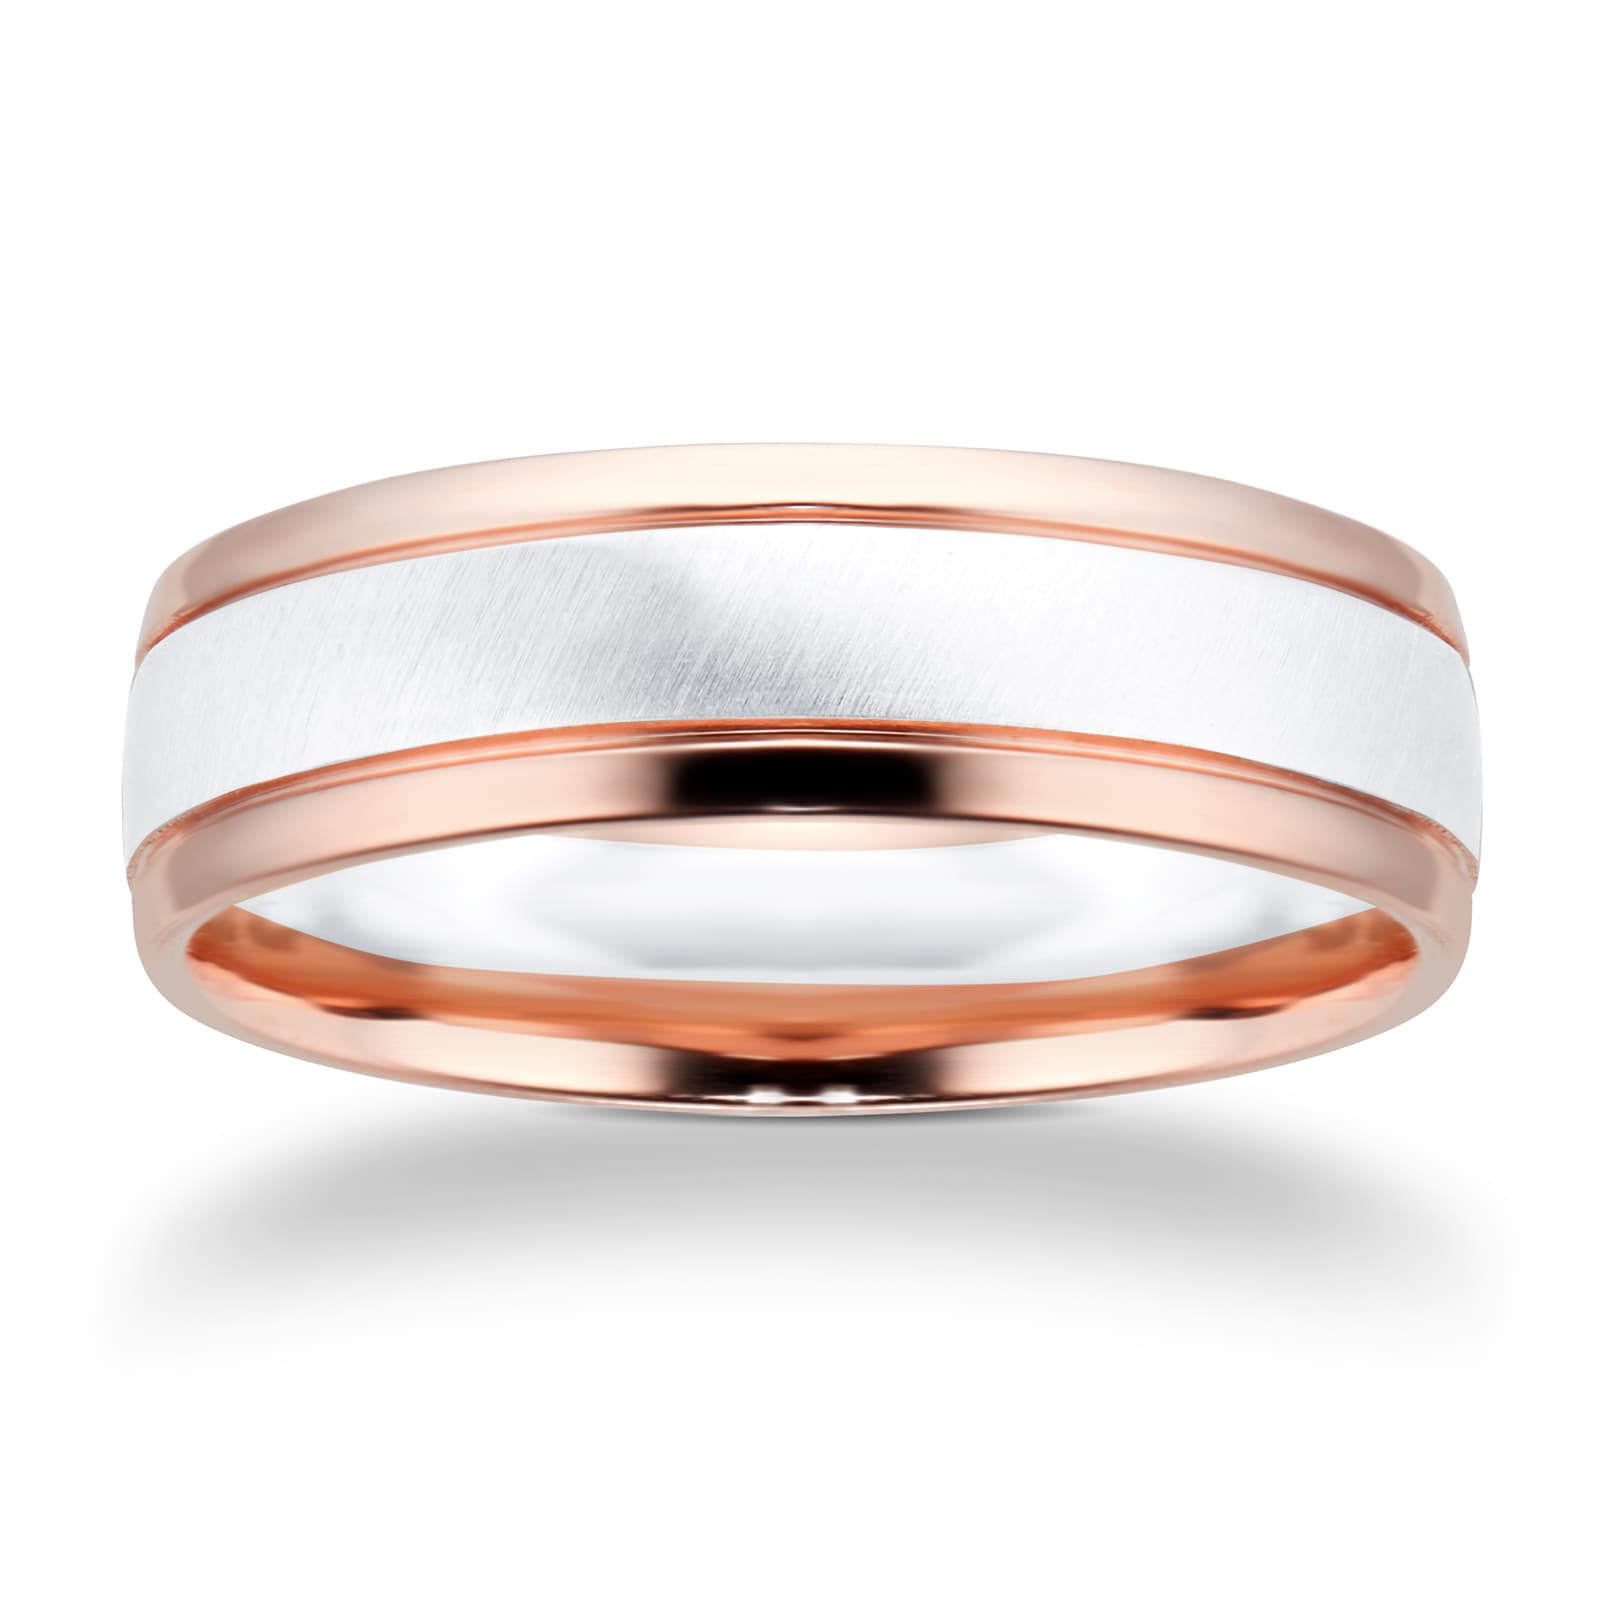 9ct White Gold & Rose Gold Two Tone Wedding Ring - Ring Size N